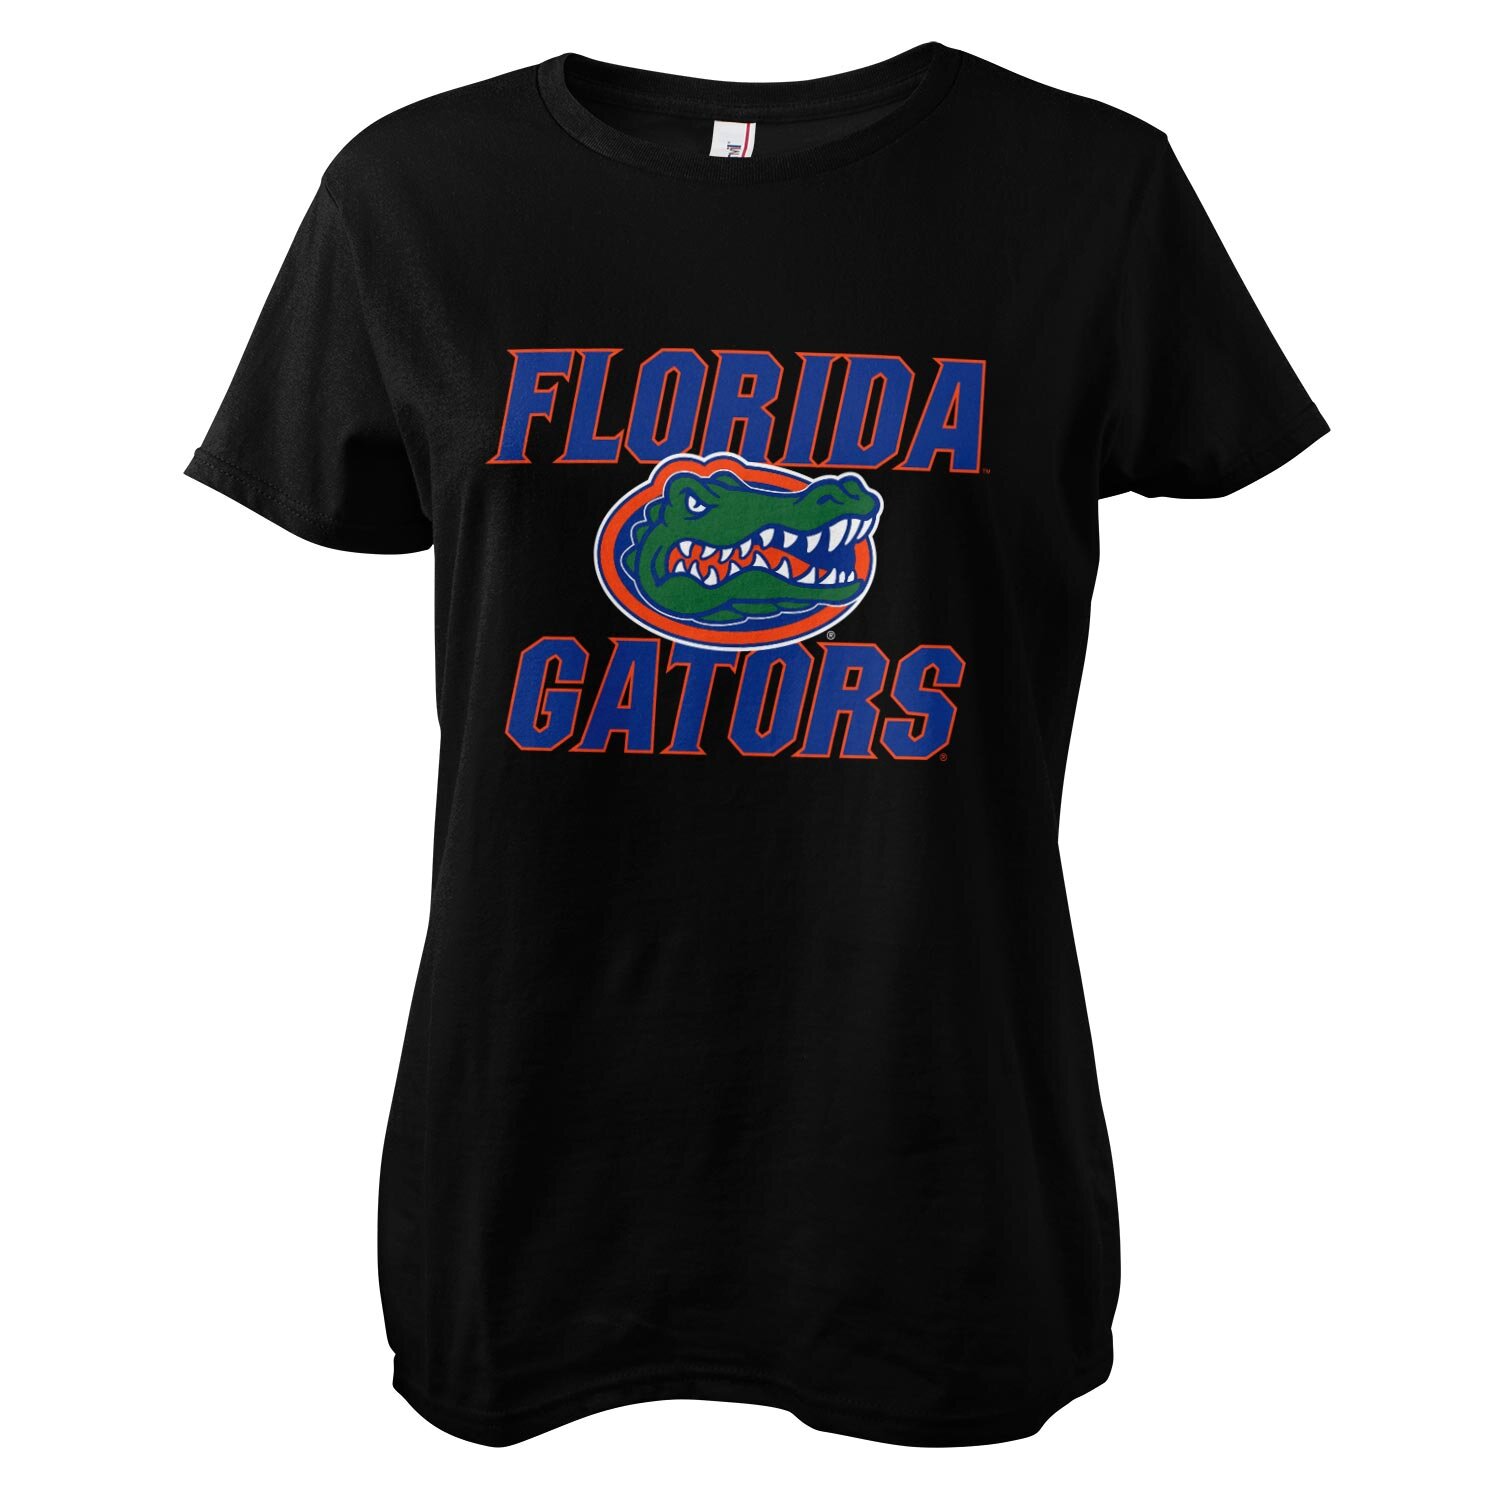 Florida Gators Girly Tee